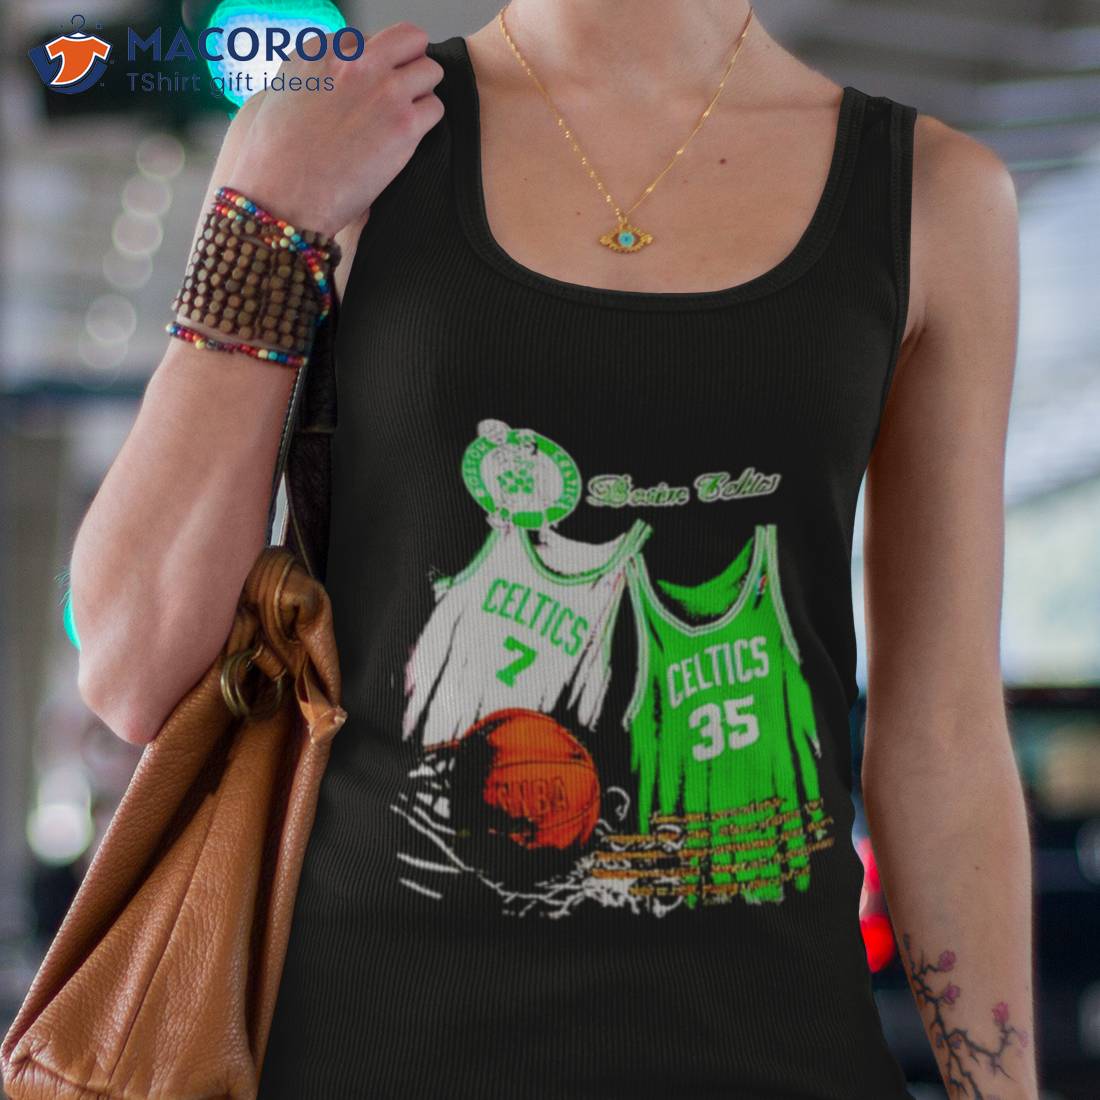 Boston Celtics Championship Goat Basketball NBA shirt